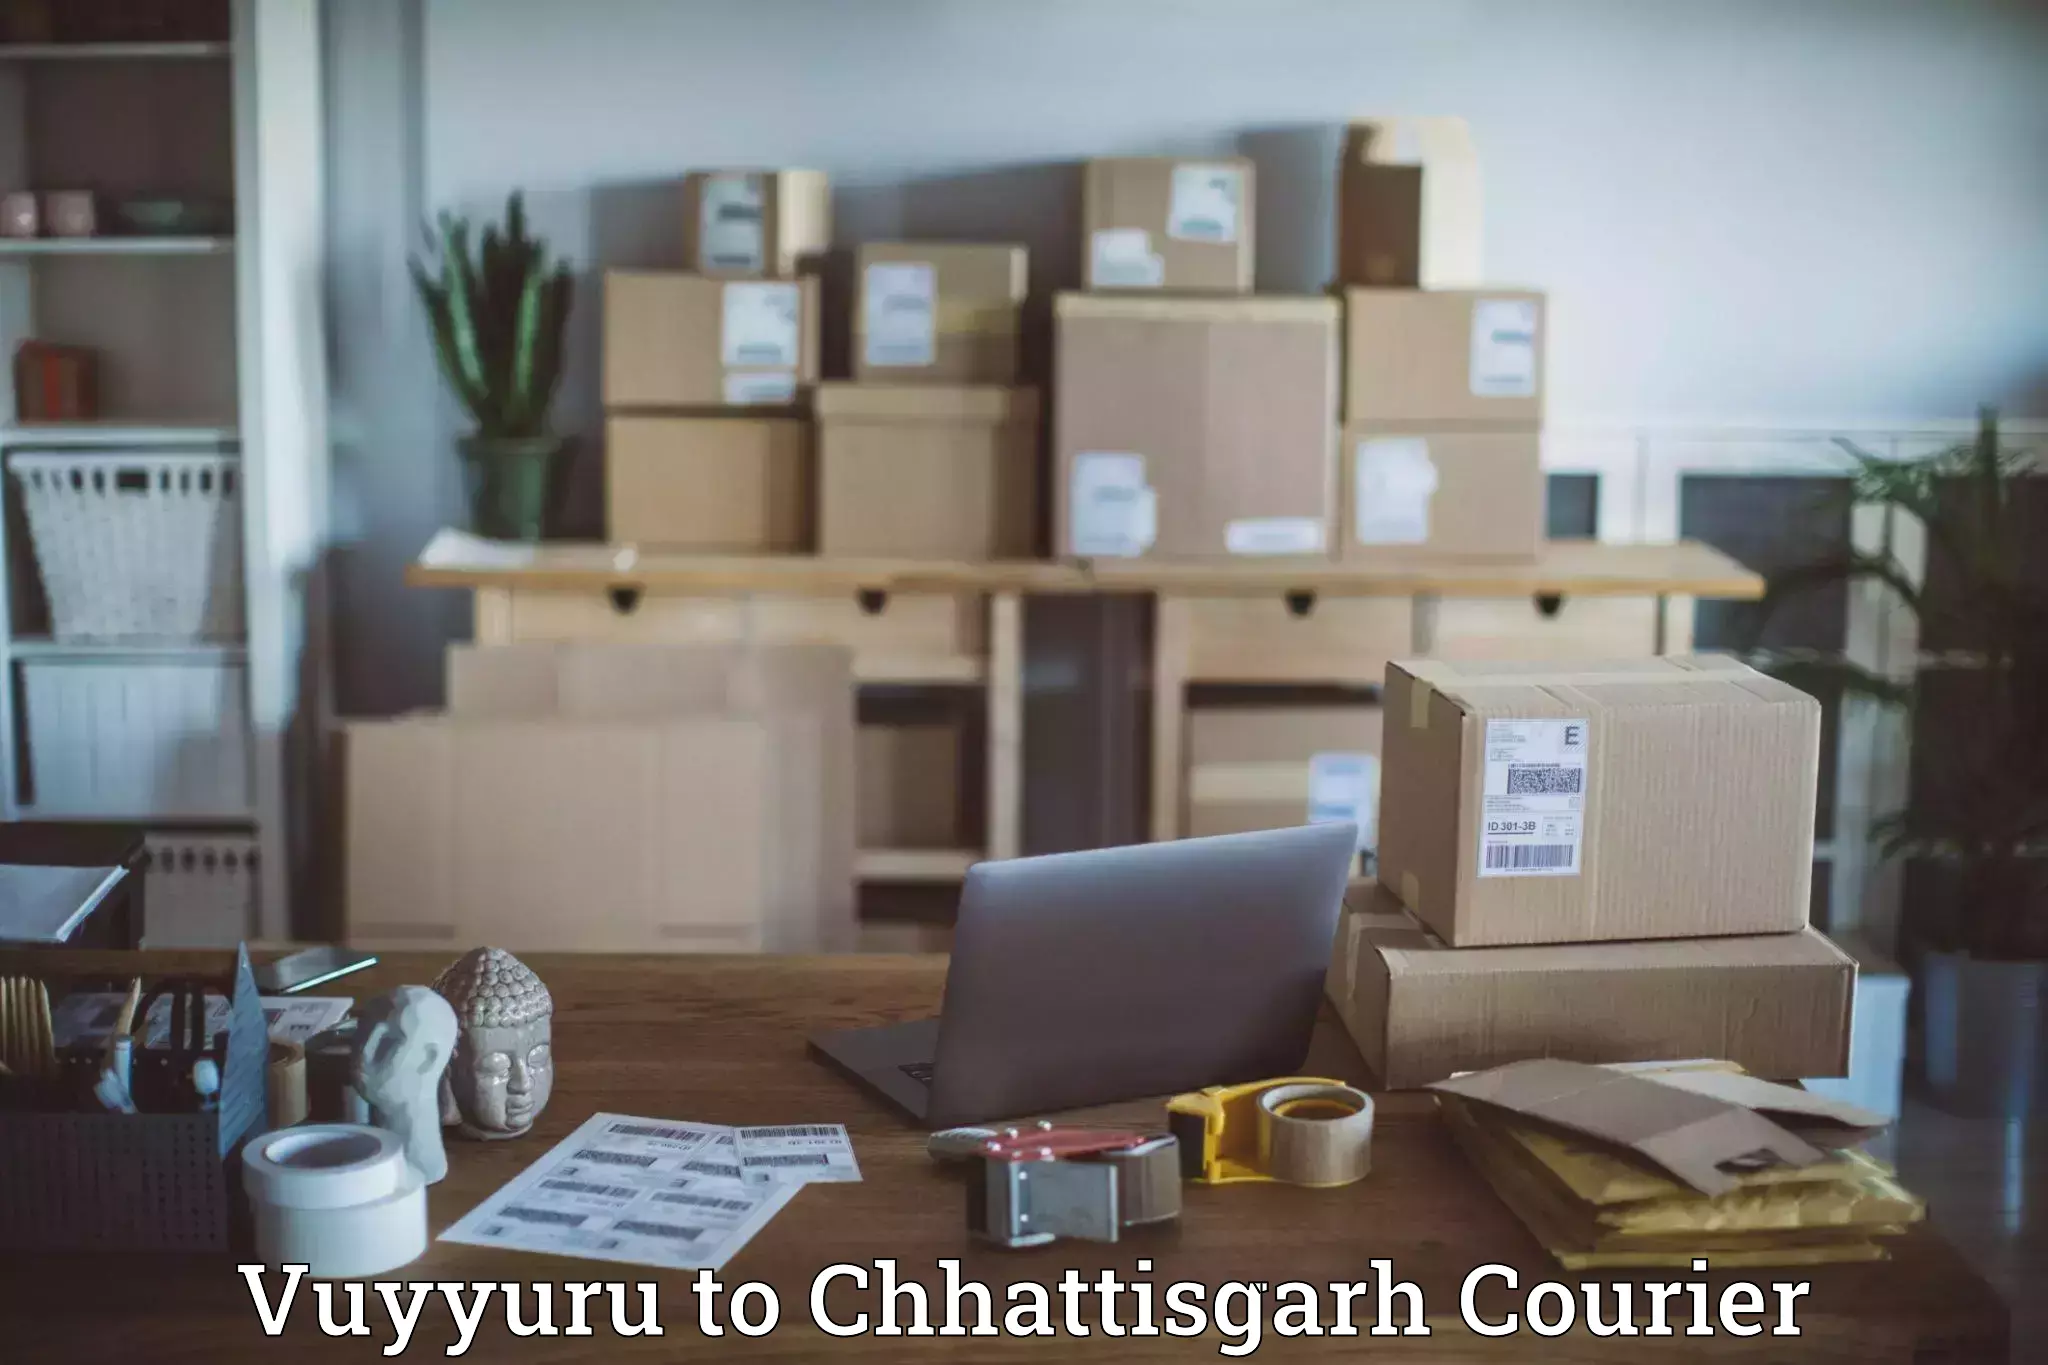 Urban courier service Vuyyuru to Chhattisgarh